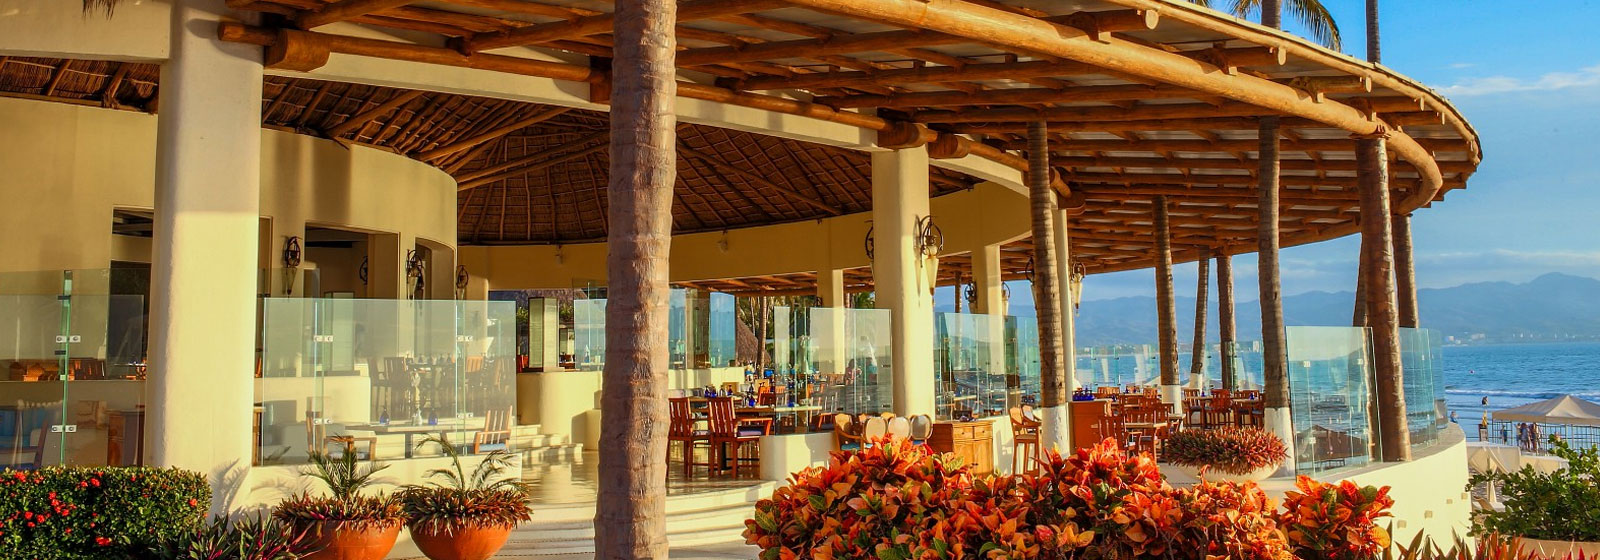 Azul Restaurant of Grand Velas Riviera Nayarit